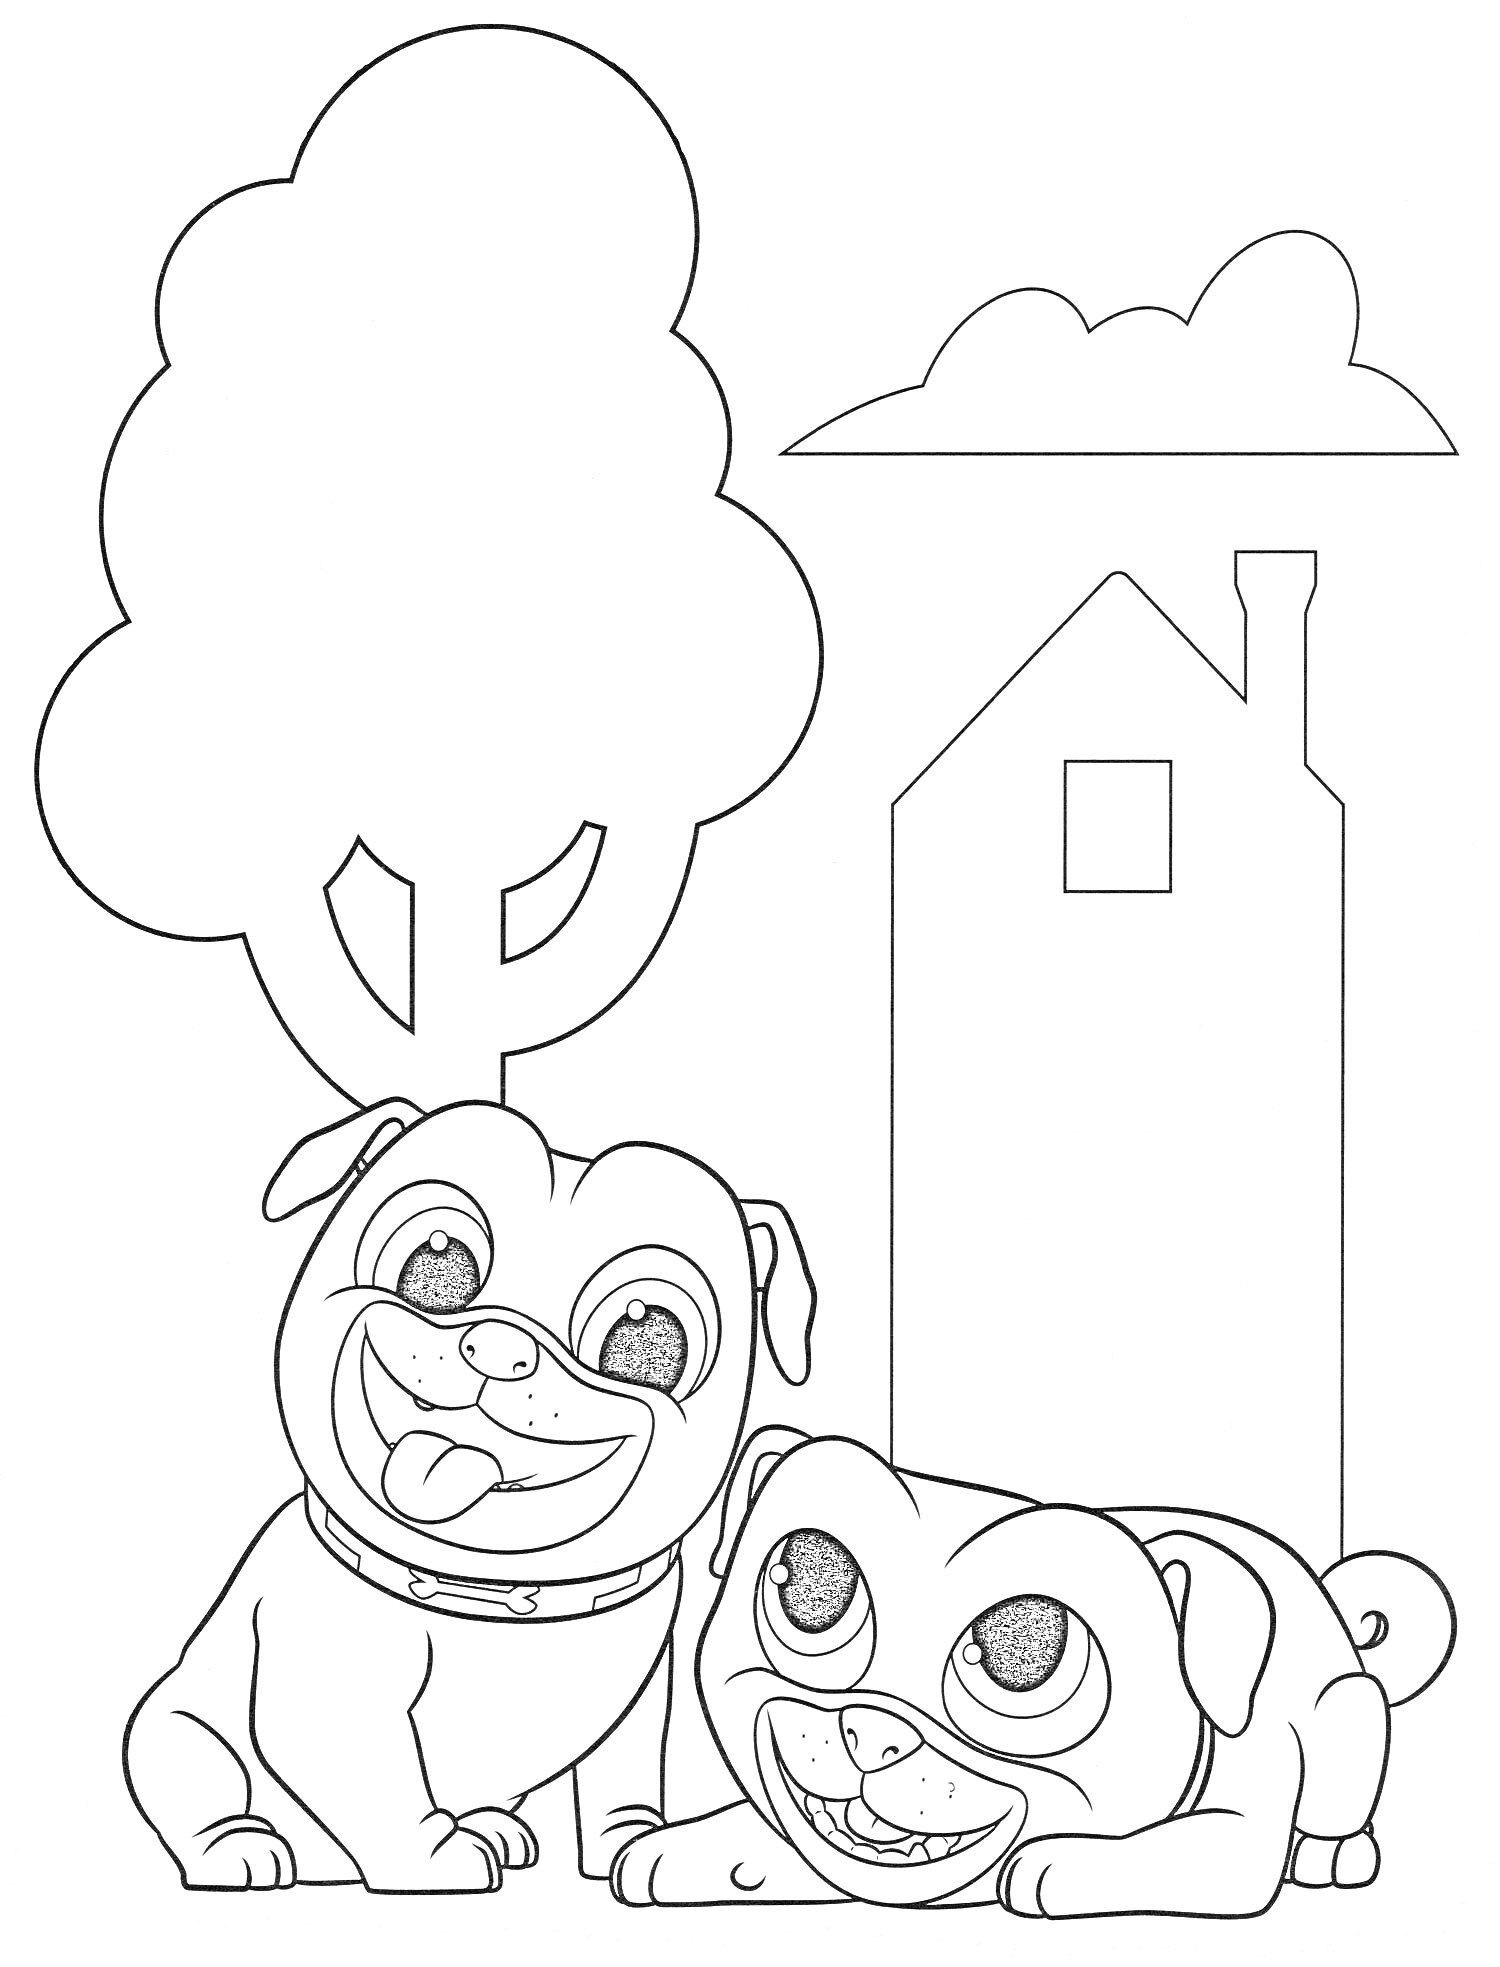 Раскраска Два дружных мопса на фоне дерева, дома и облака